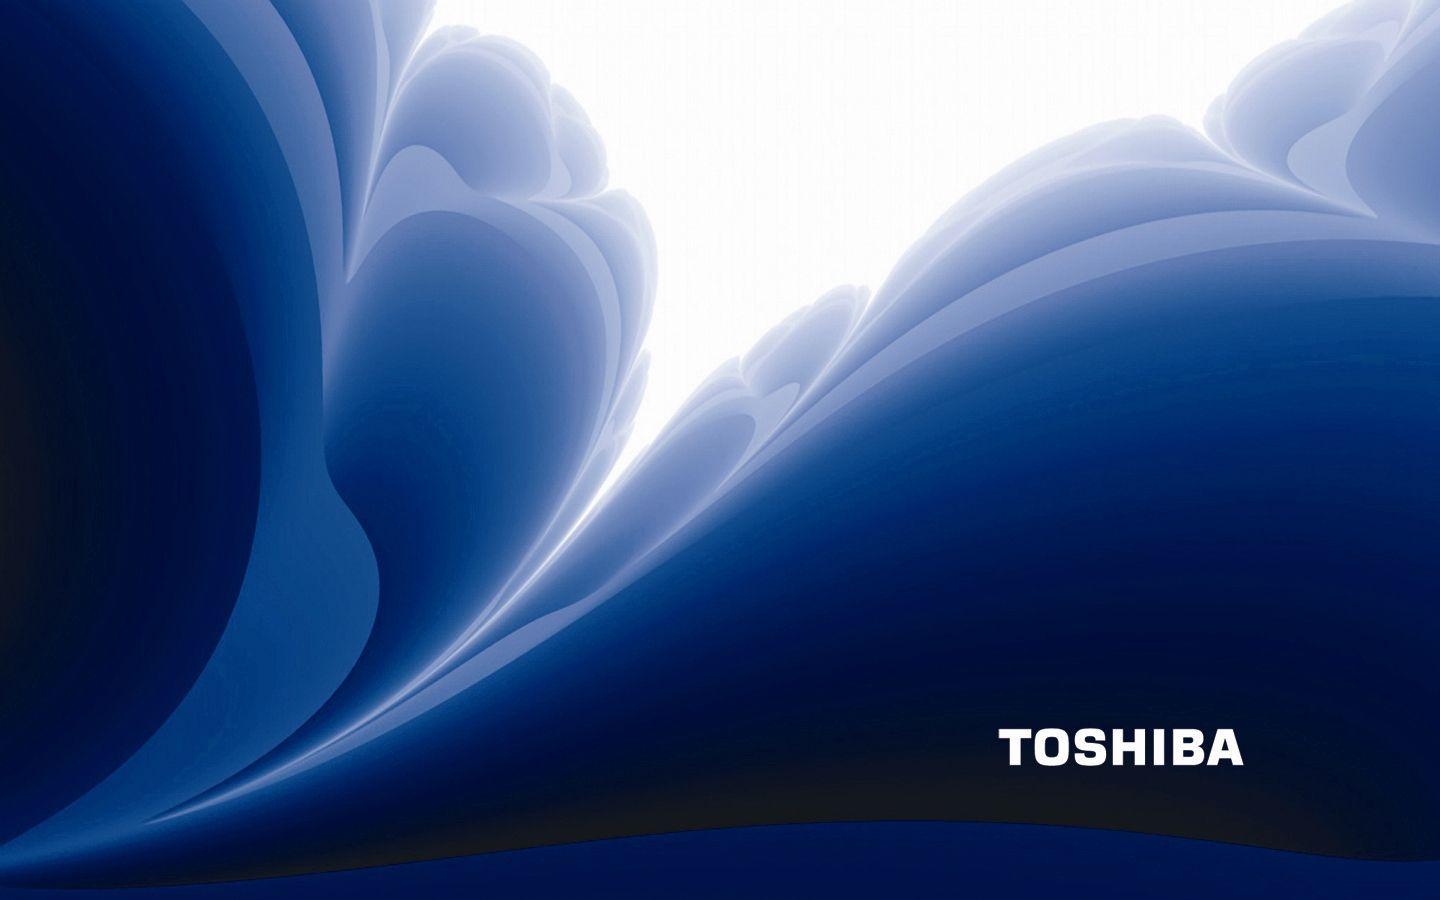 Toshiba Background Wallpaper